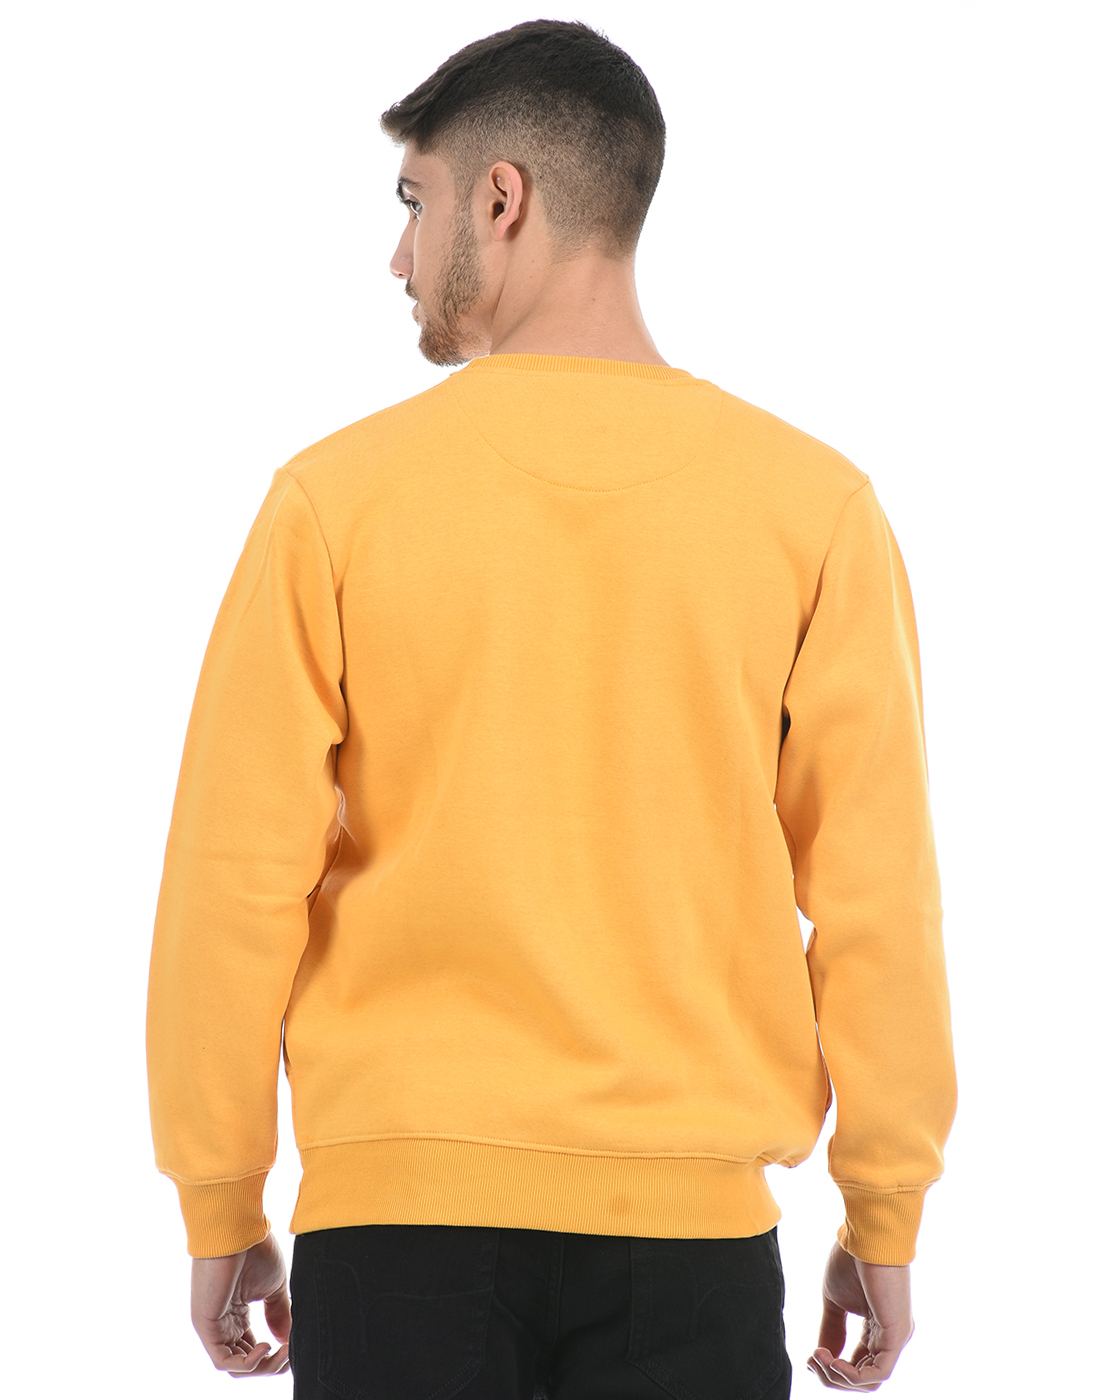 Cloak & Decker by Monte Carlo Men Printed Yellow Sweatshirt